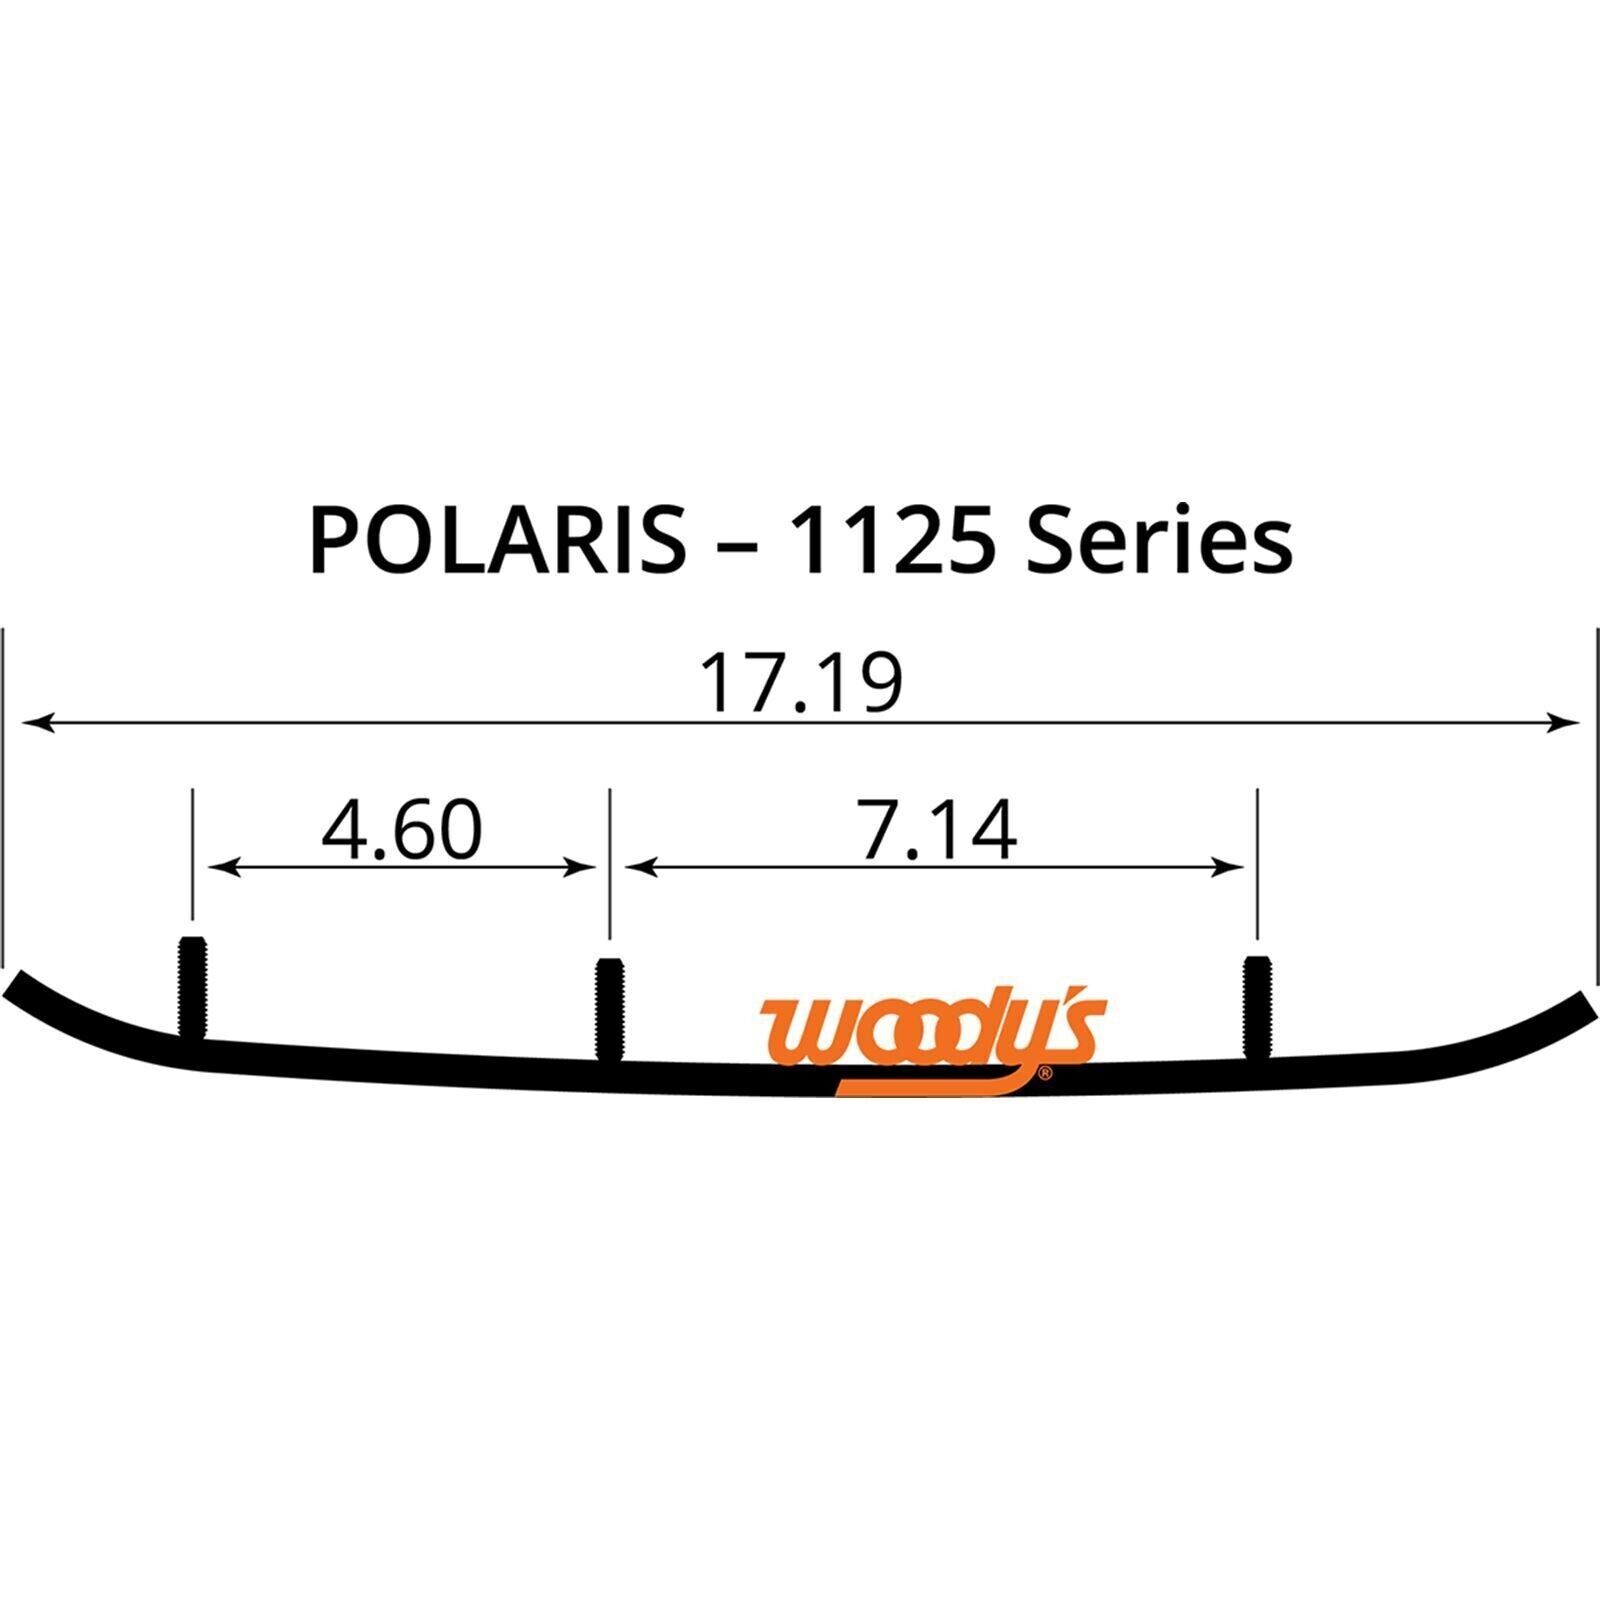 Trail Blazer IV Carbides 6 in - Polaris Snowmobile (TPI41125)